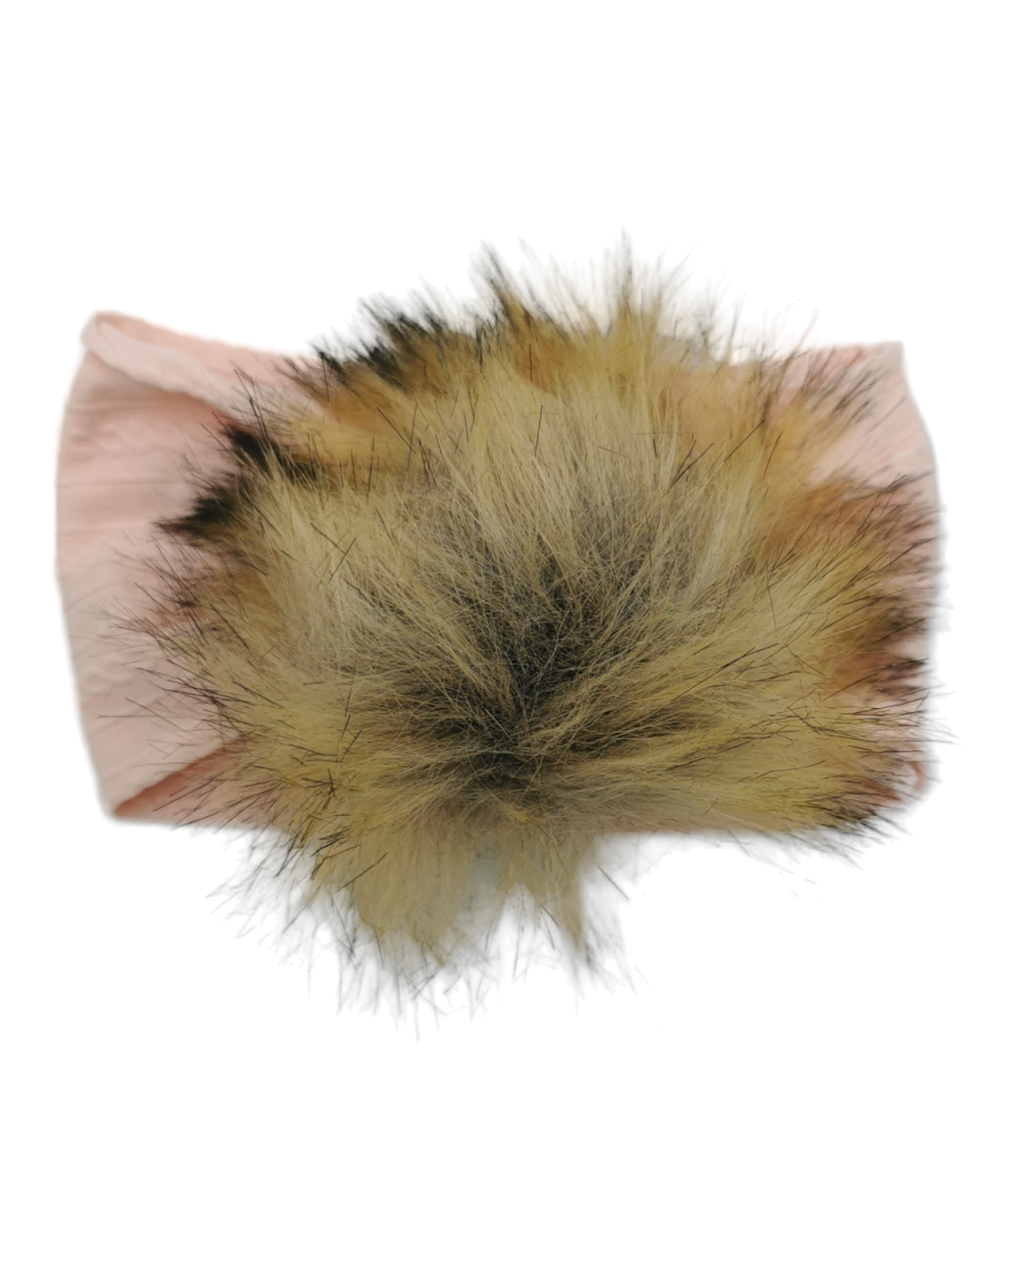 Light Pink Faux Fur Pom Cable Knit Headwrap - Betty Brown Boutique Ltd